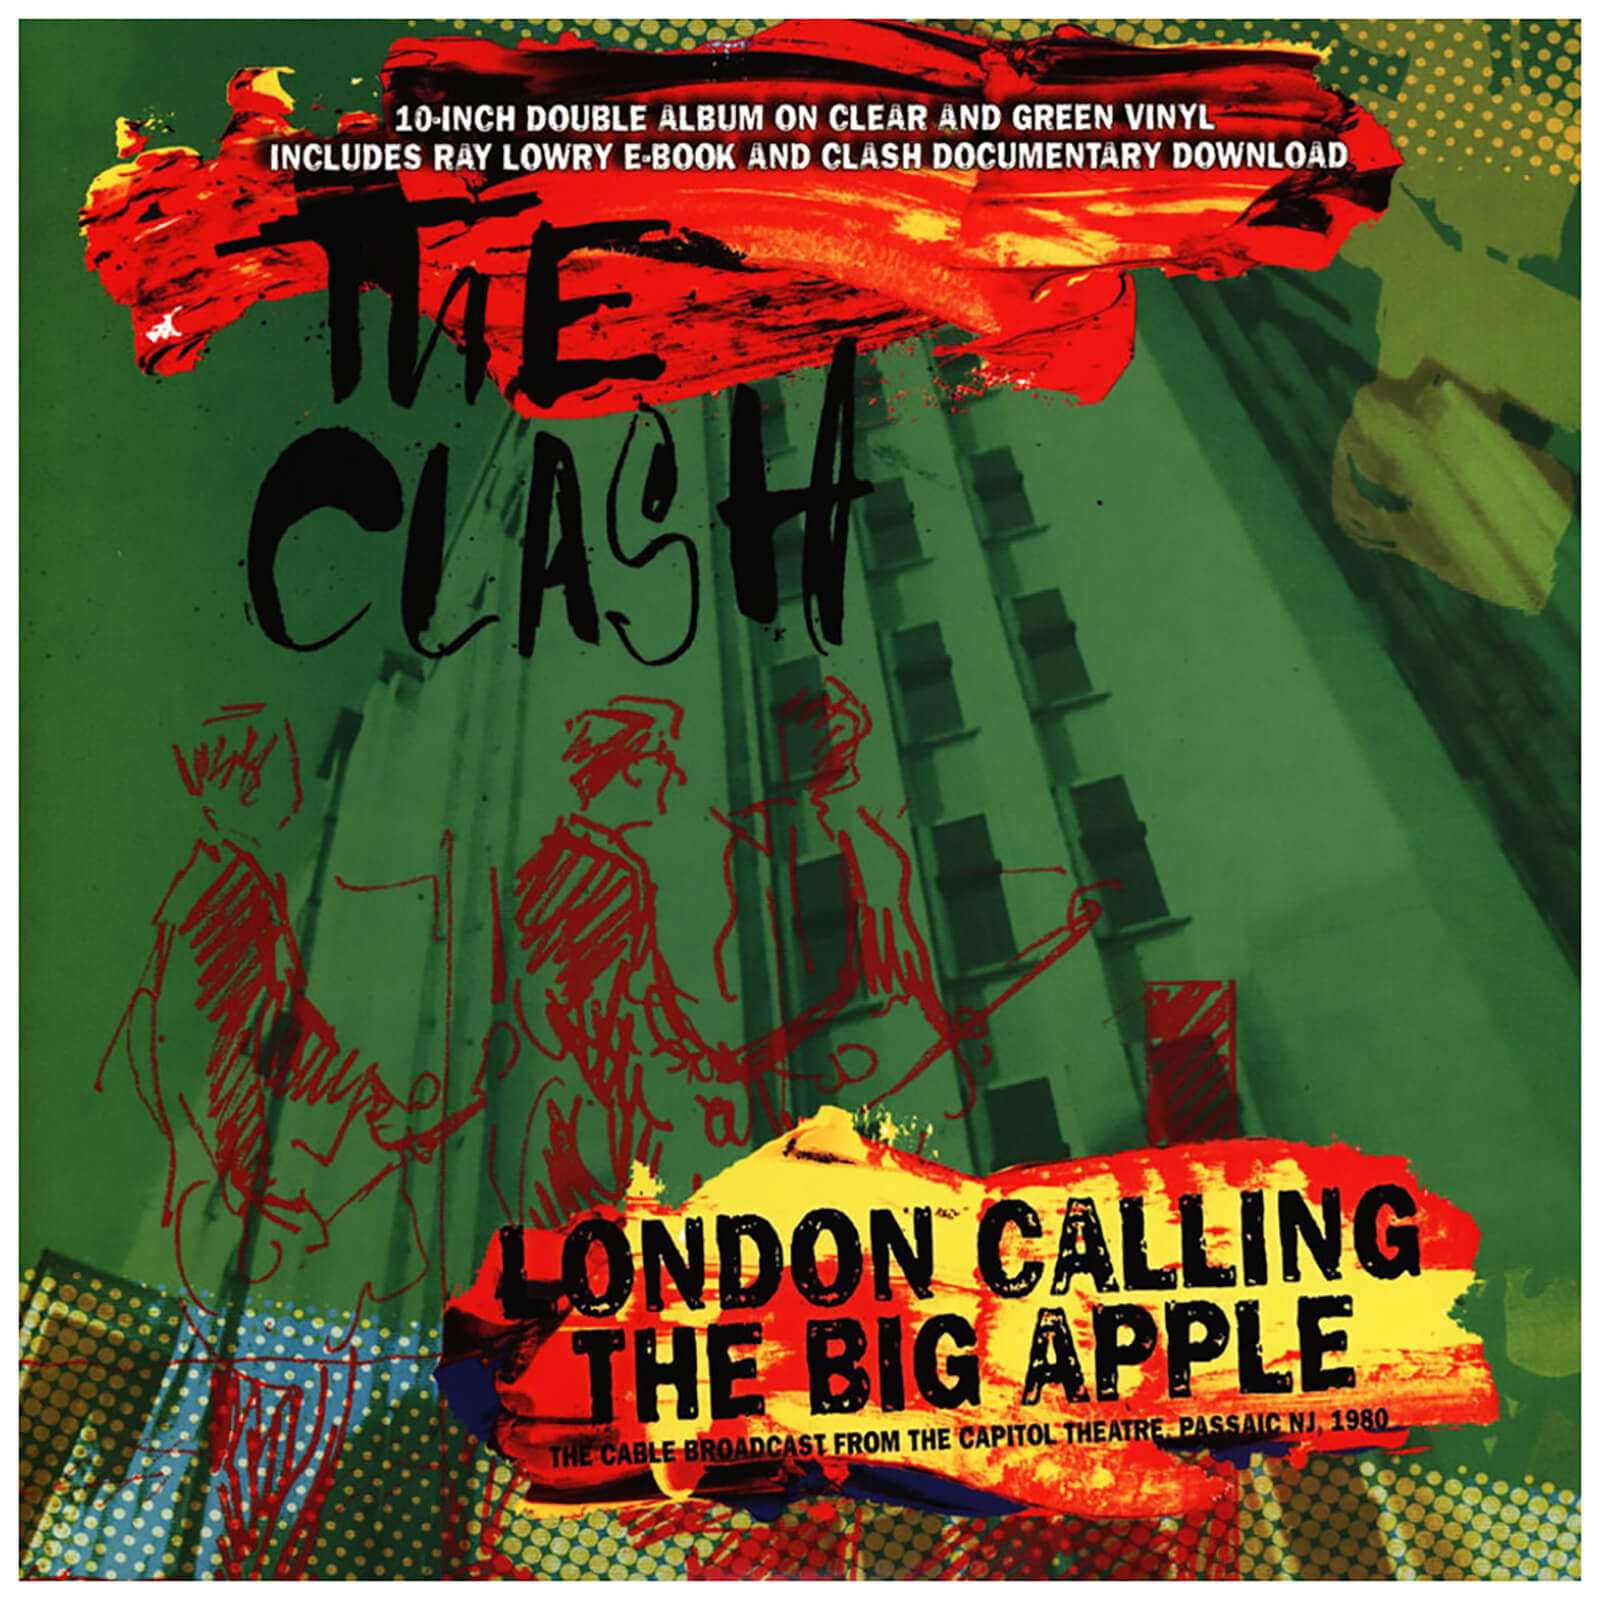 The Clash - London Calling The Big Apple (Clear & Green Vinyl) 2x 10